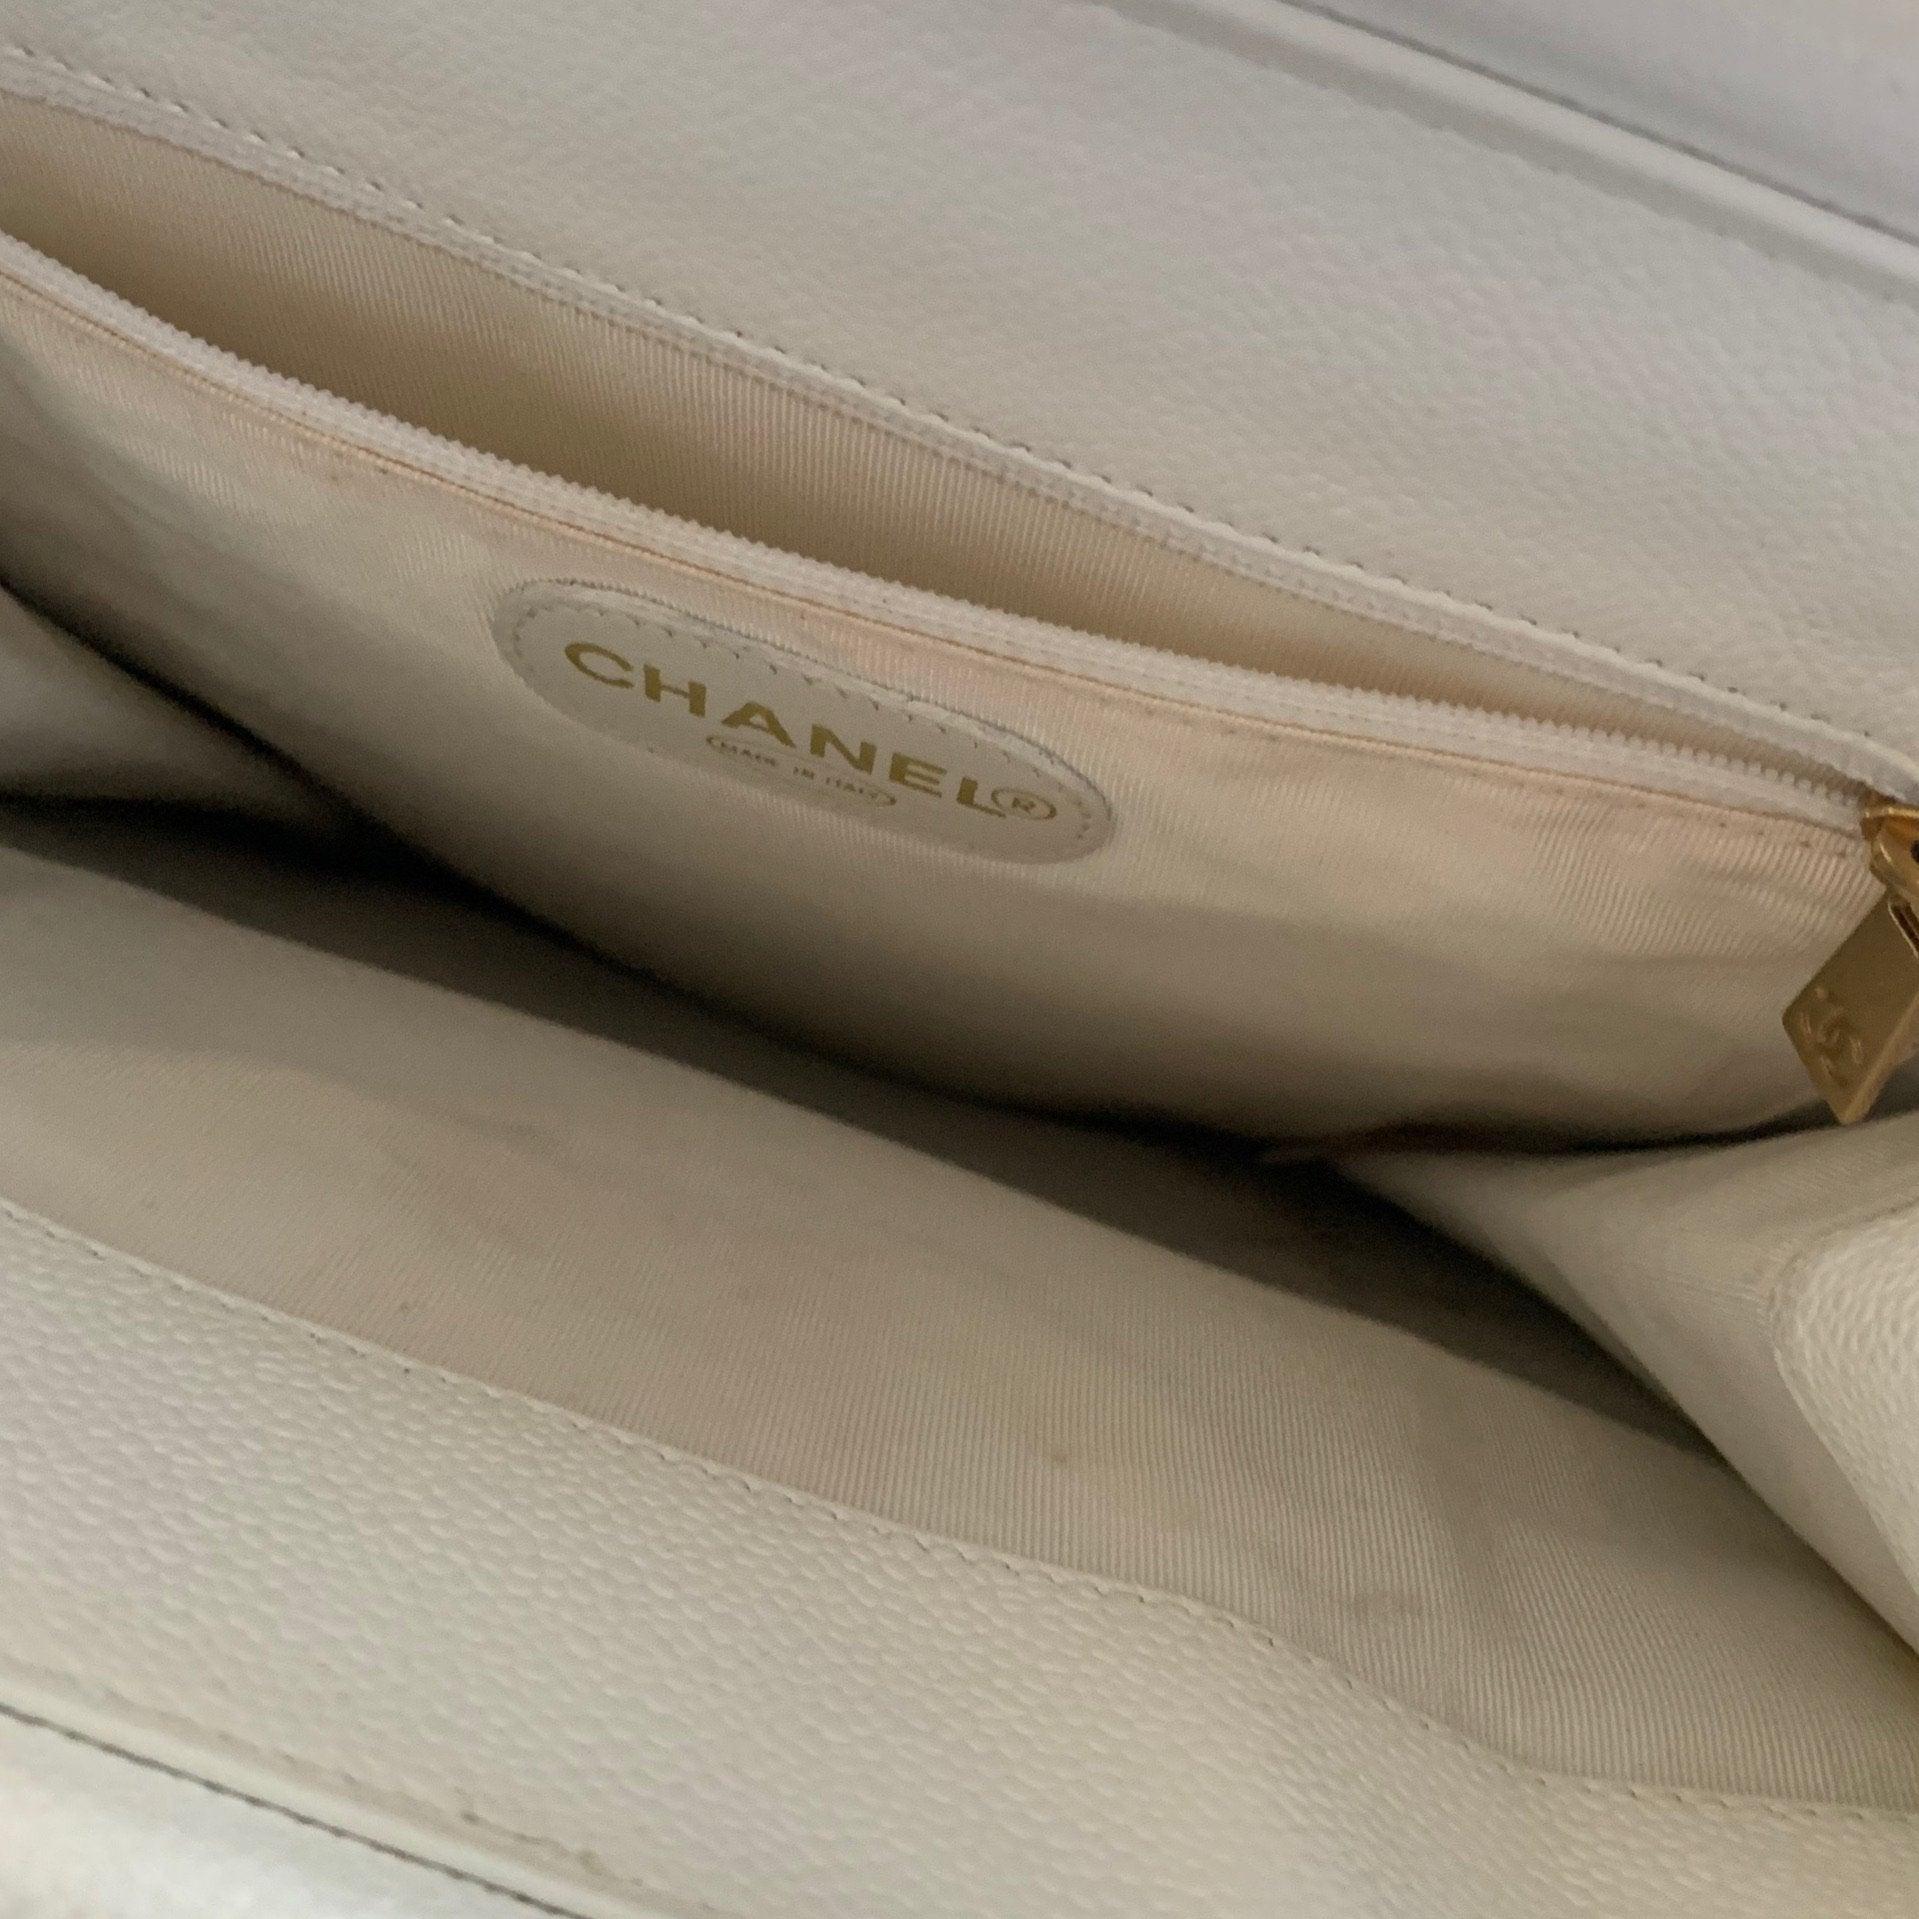 Chanel White Caviar Logo Top Handle Bag - Handbags